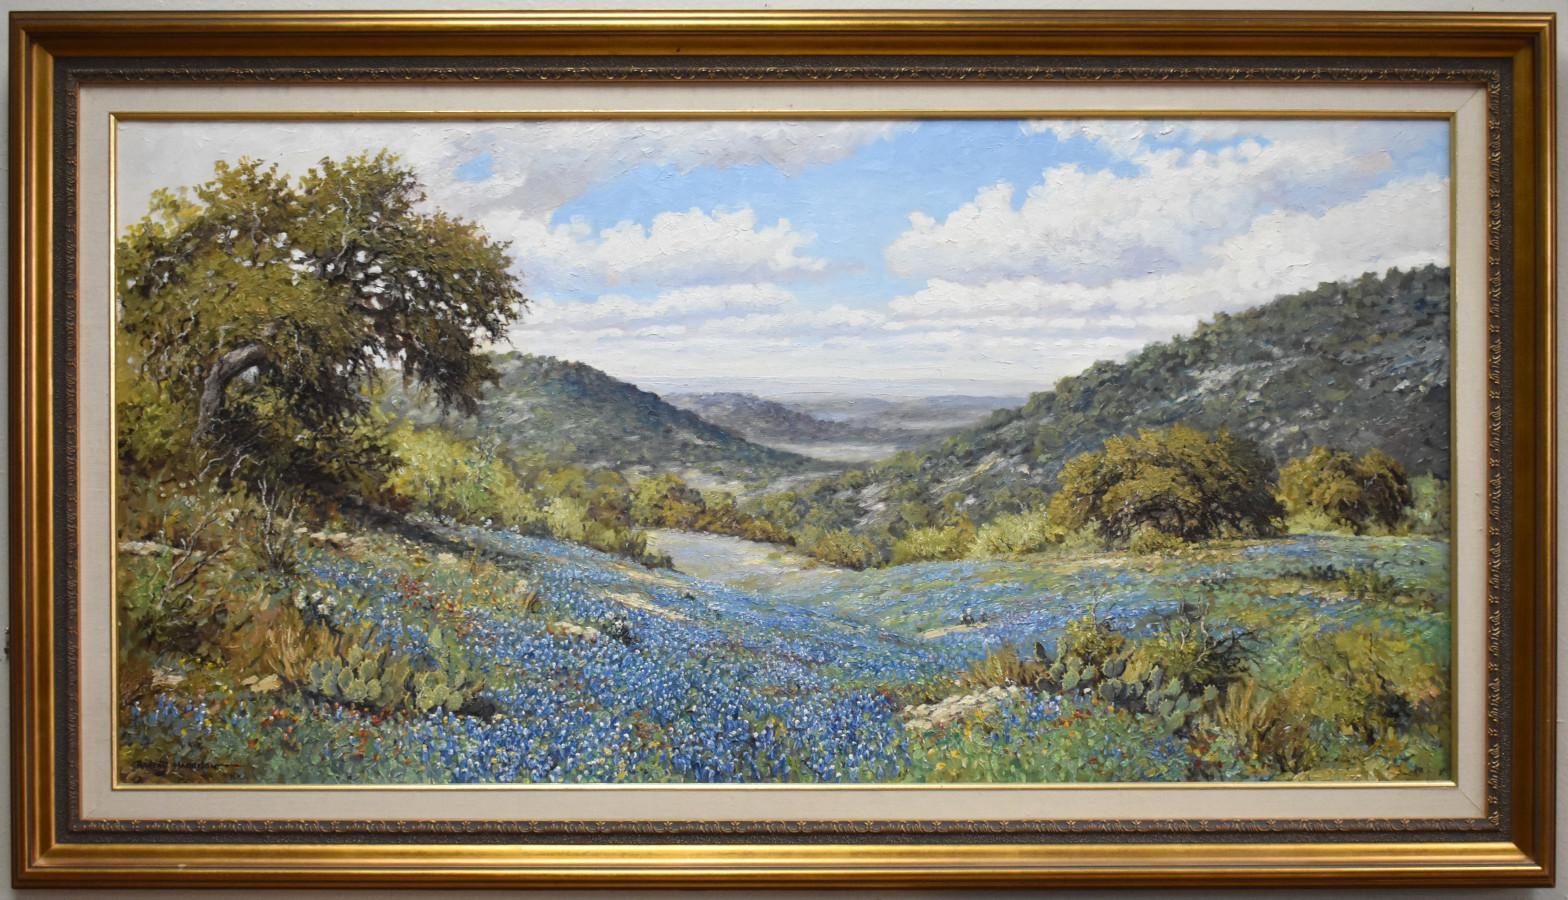 Landscape Painting Robert Harrison - "BLUEBONNETS VALLEY" TEXAS HILL COUNTRY FRAMÉ 31 X 55 BORN 1949 HEAVY IMPASTO